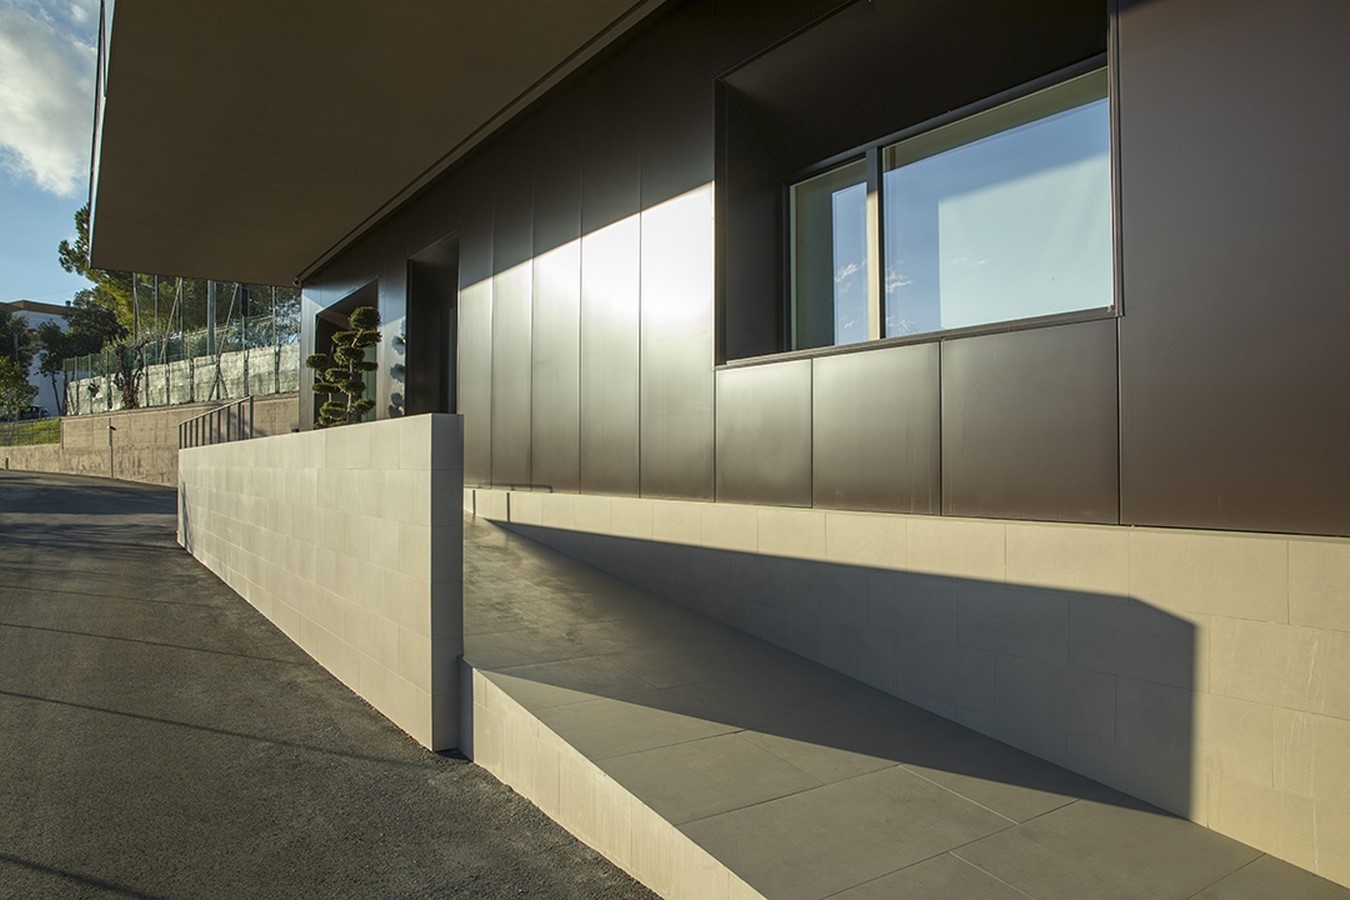 NEW INNOLIVING OFFICE By Sardellini Marasca Architetti - Sheet5